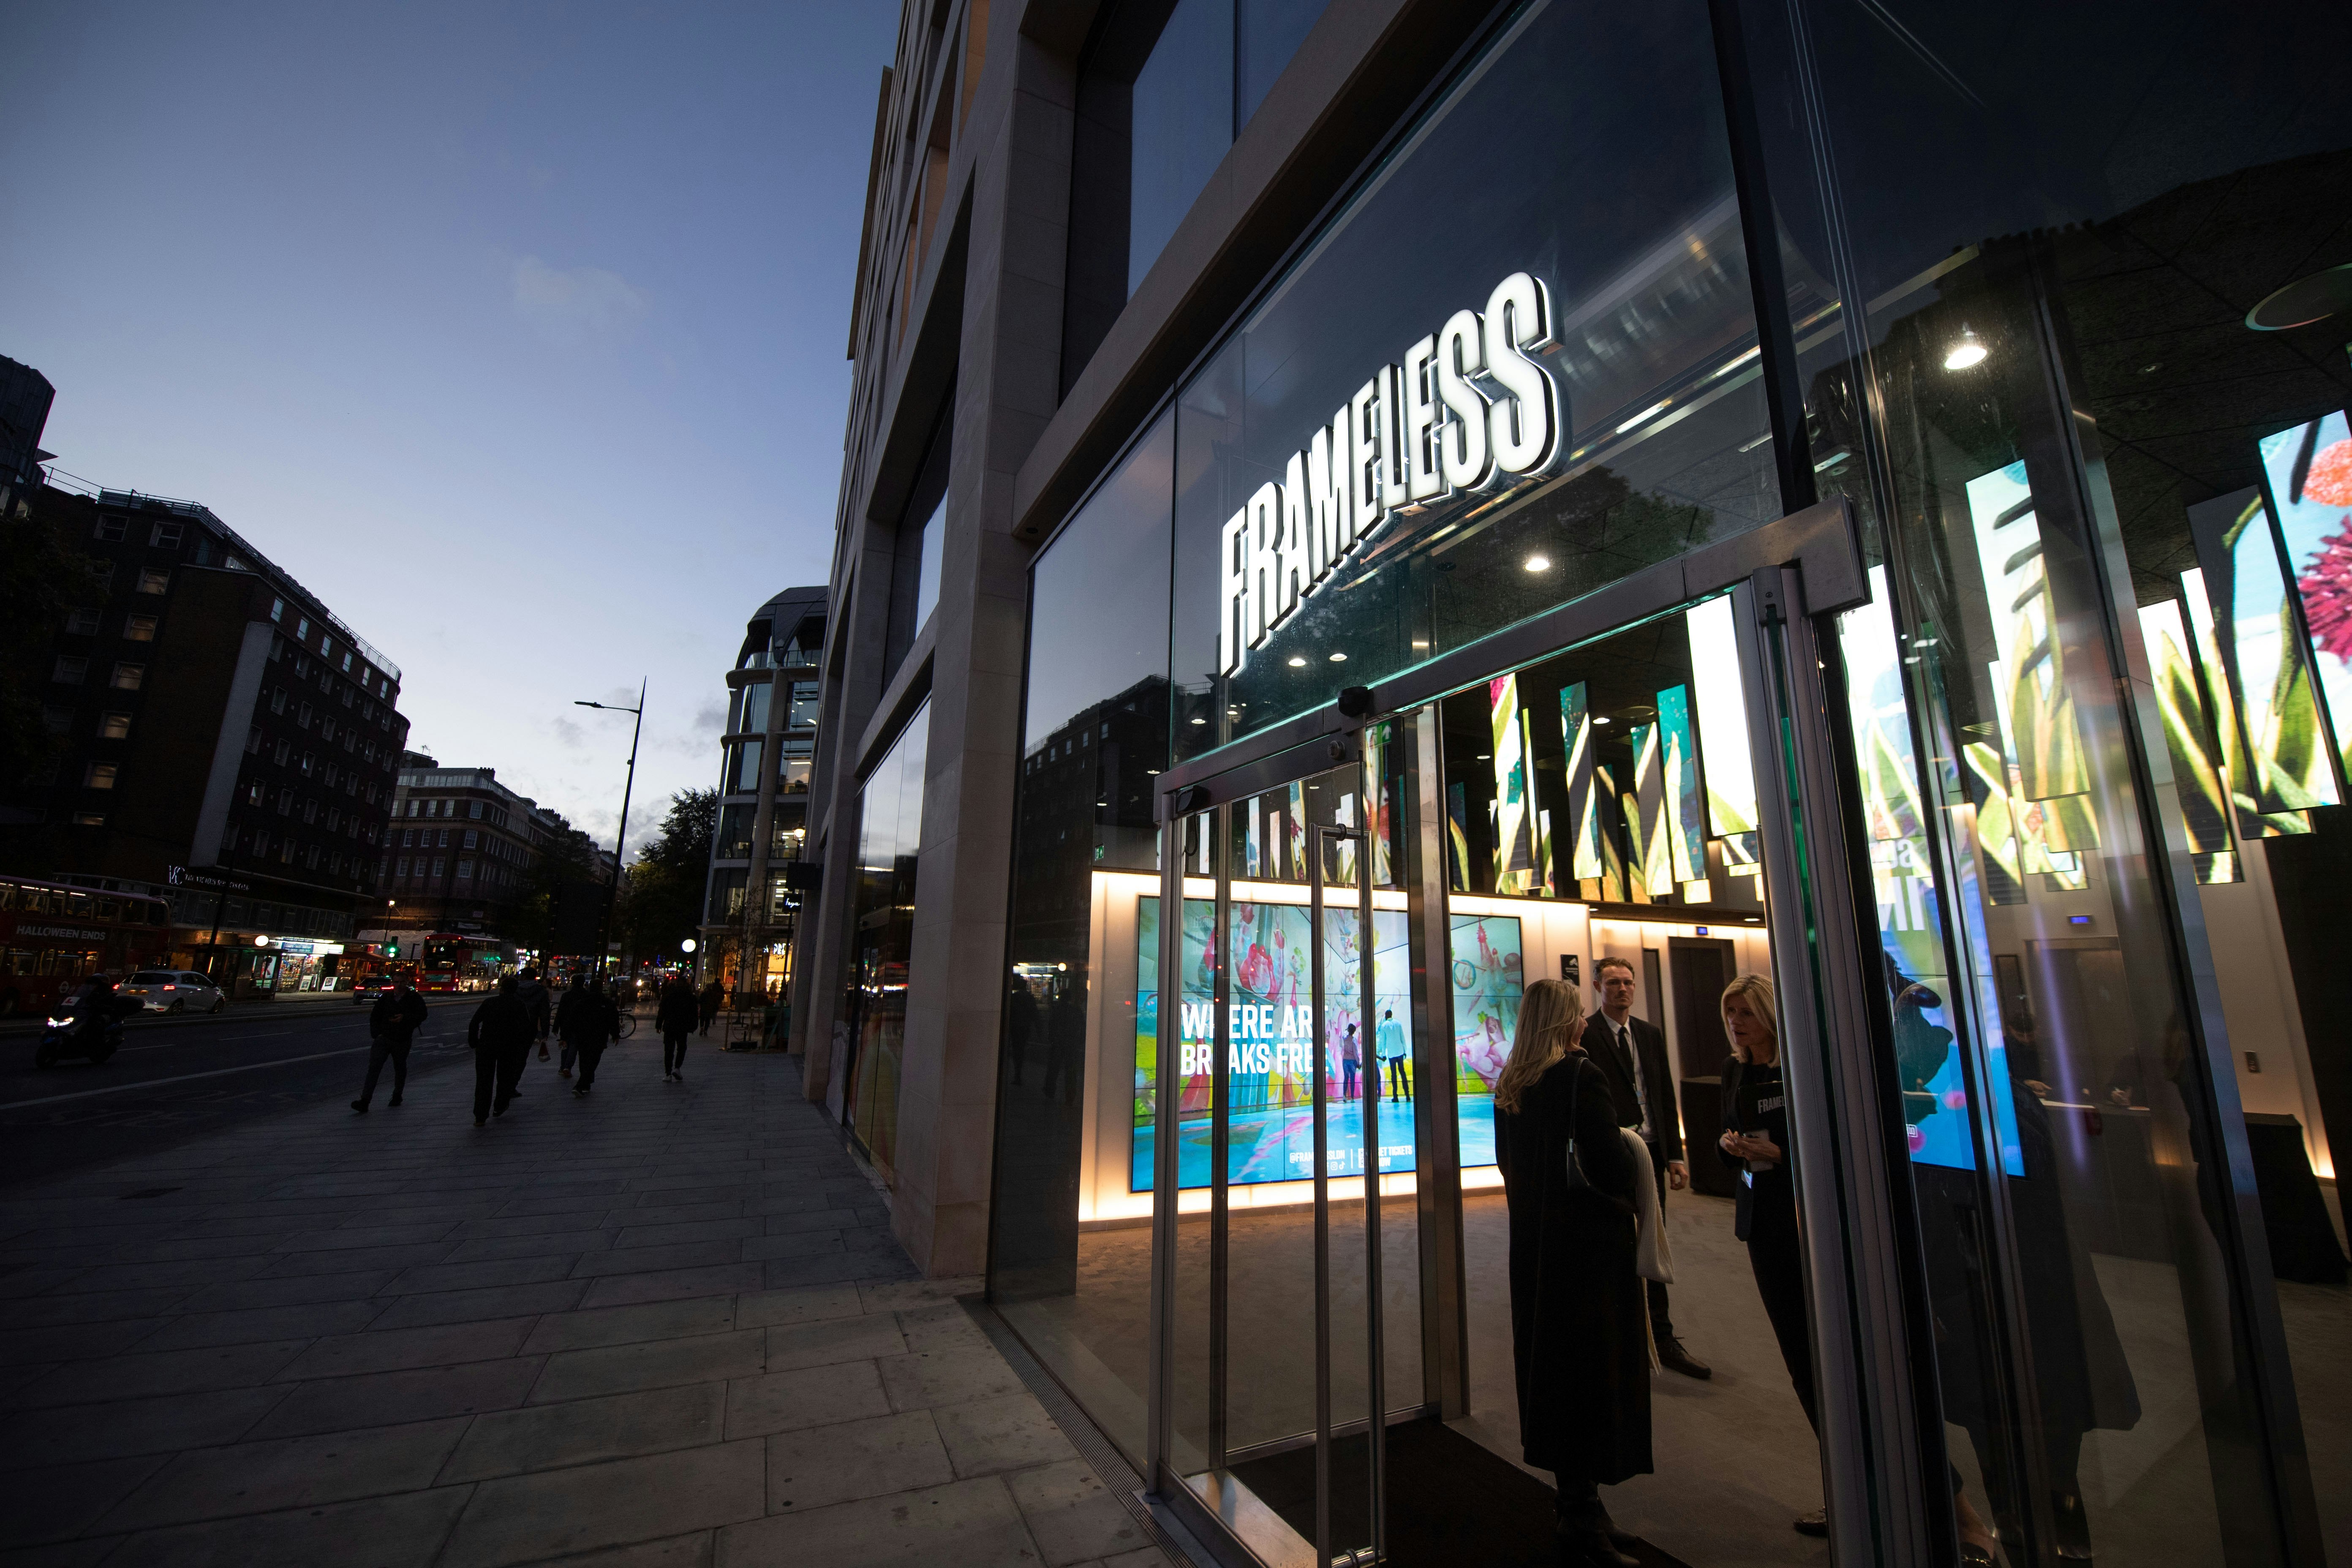 Pop Up Shops Venues in London - Frameless